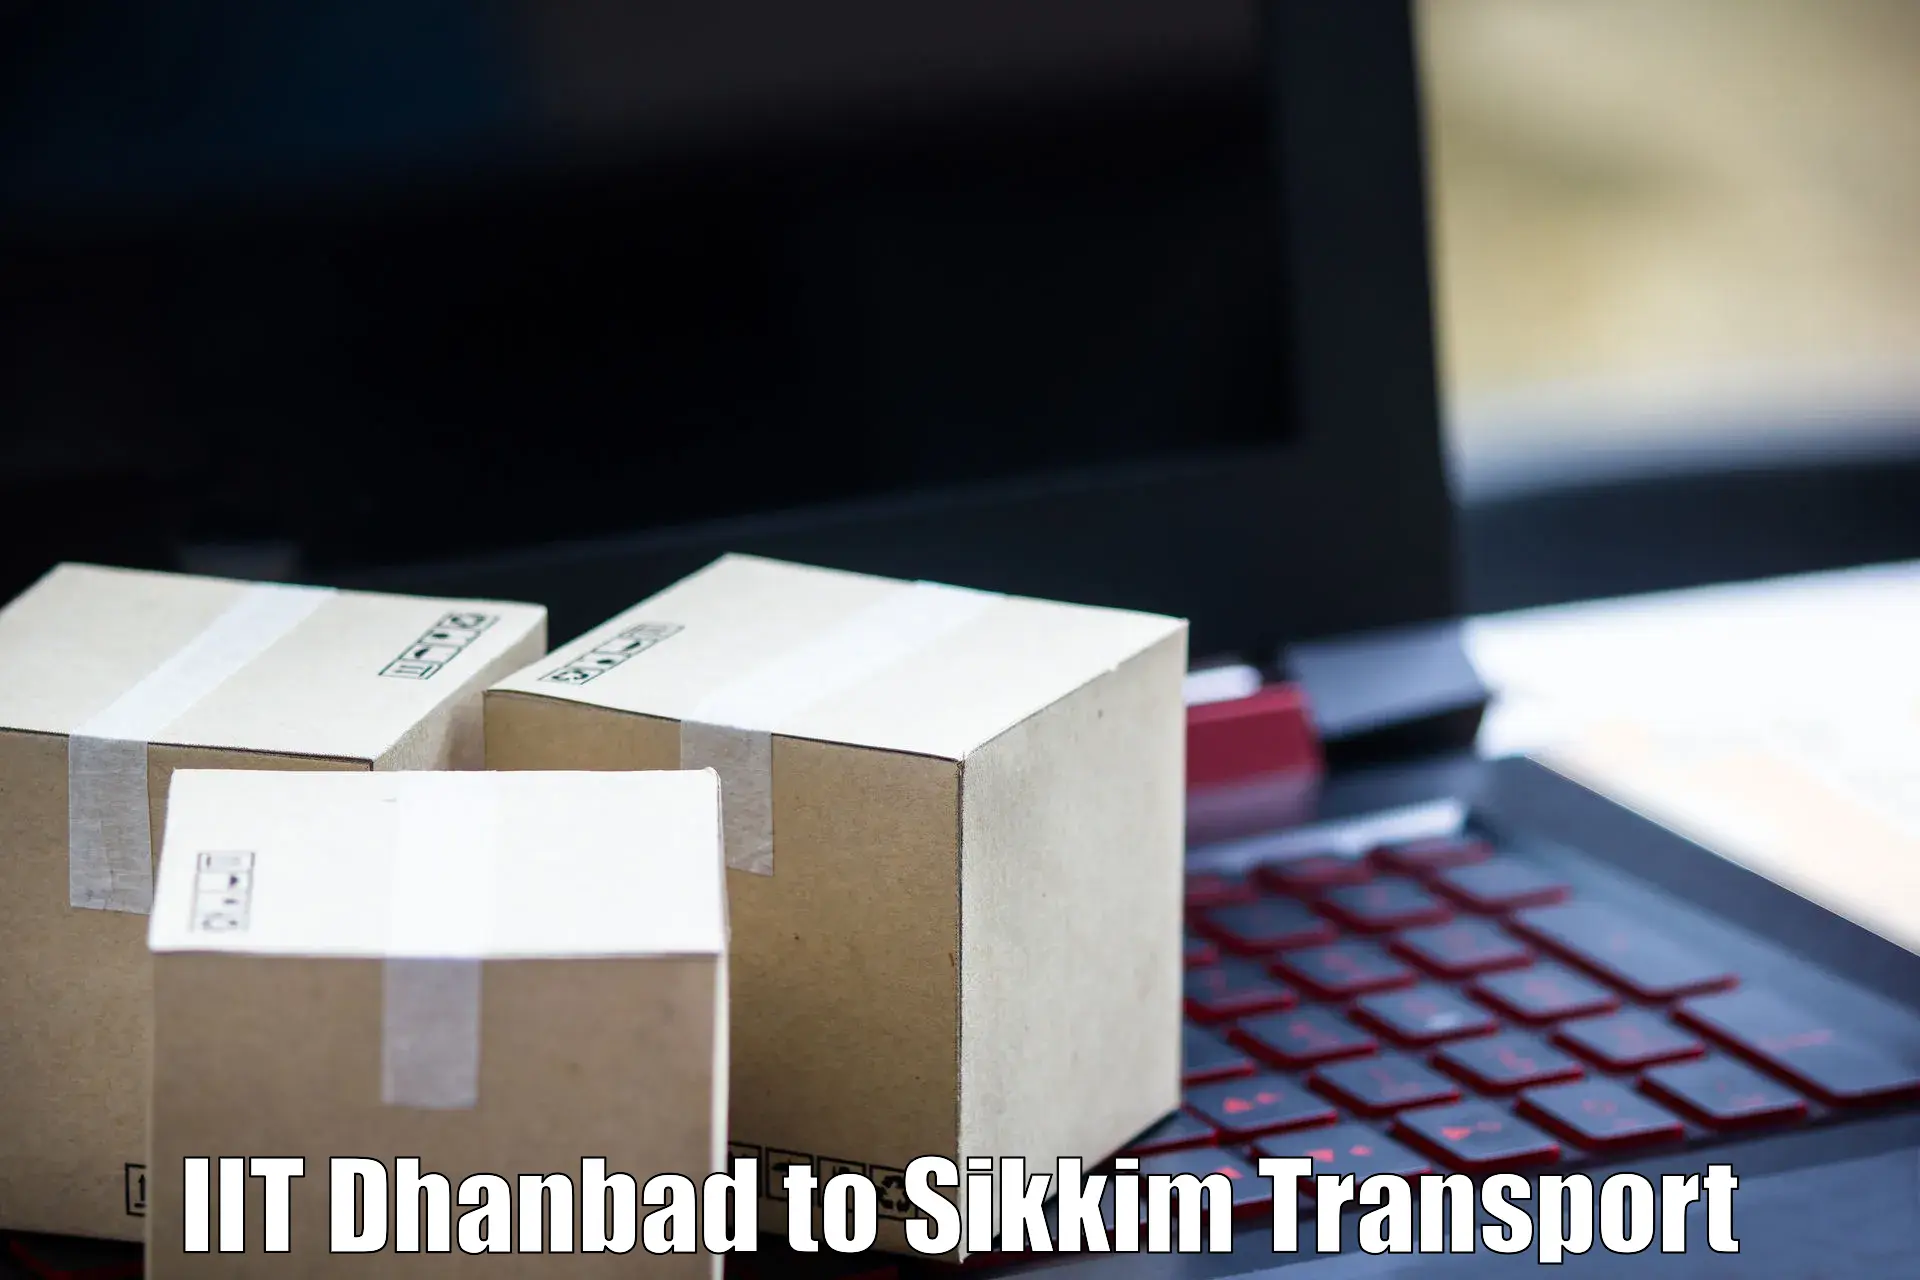 Online transport service IIT Dhanbad to Gangtok